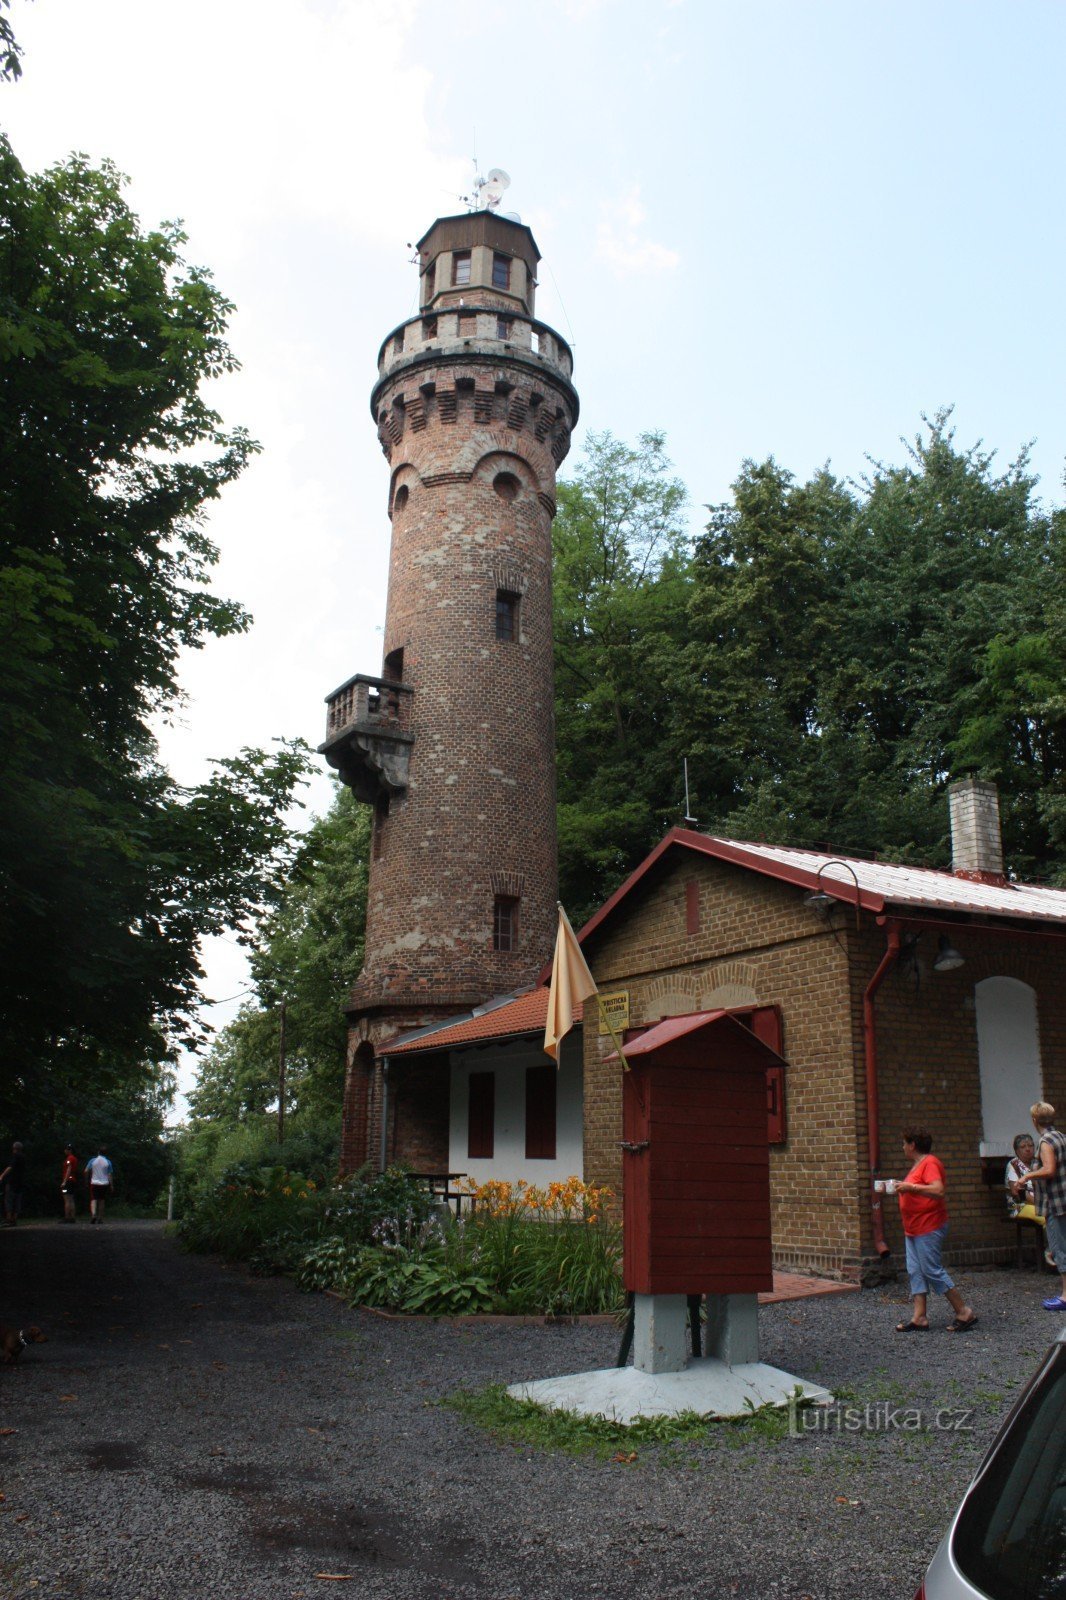 Torre panoramica in pietra a Frýdlant